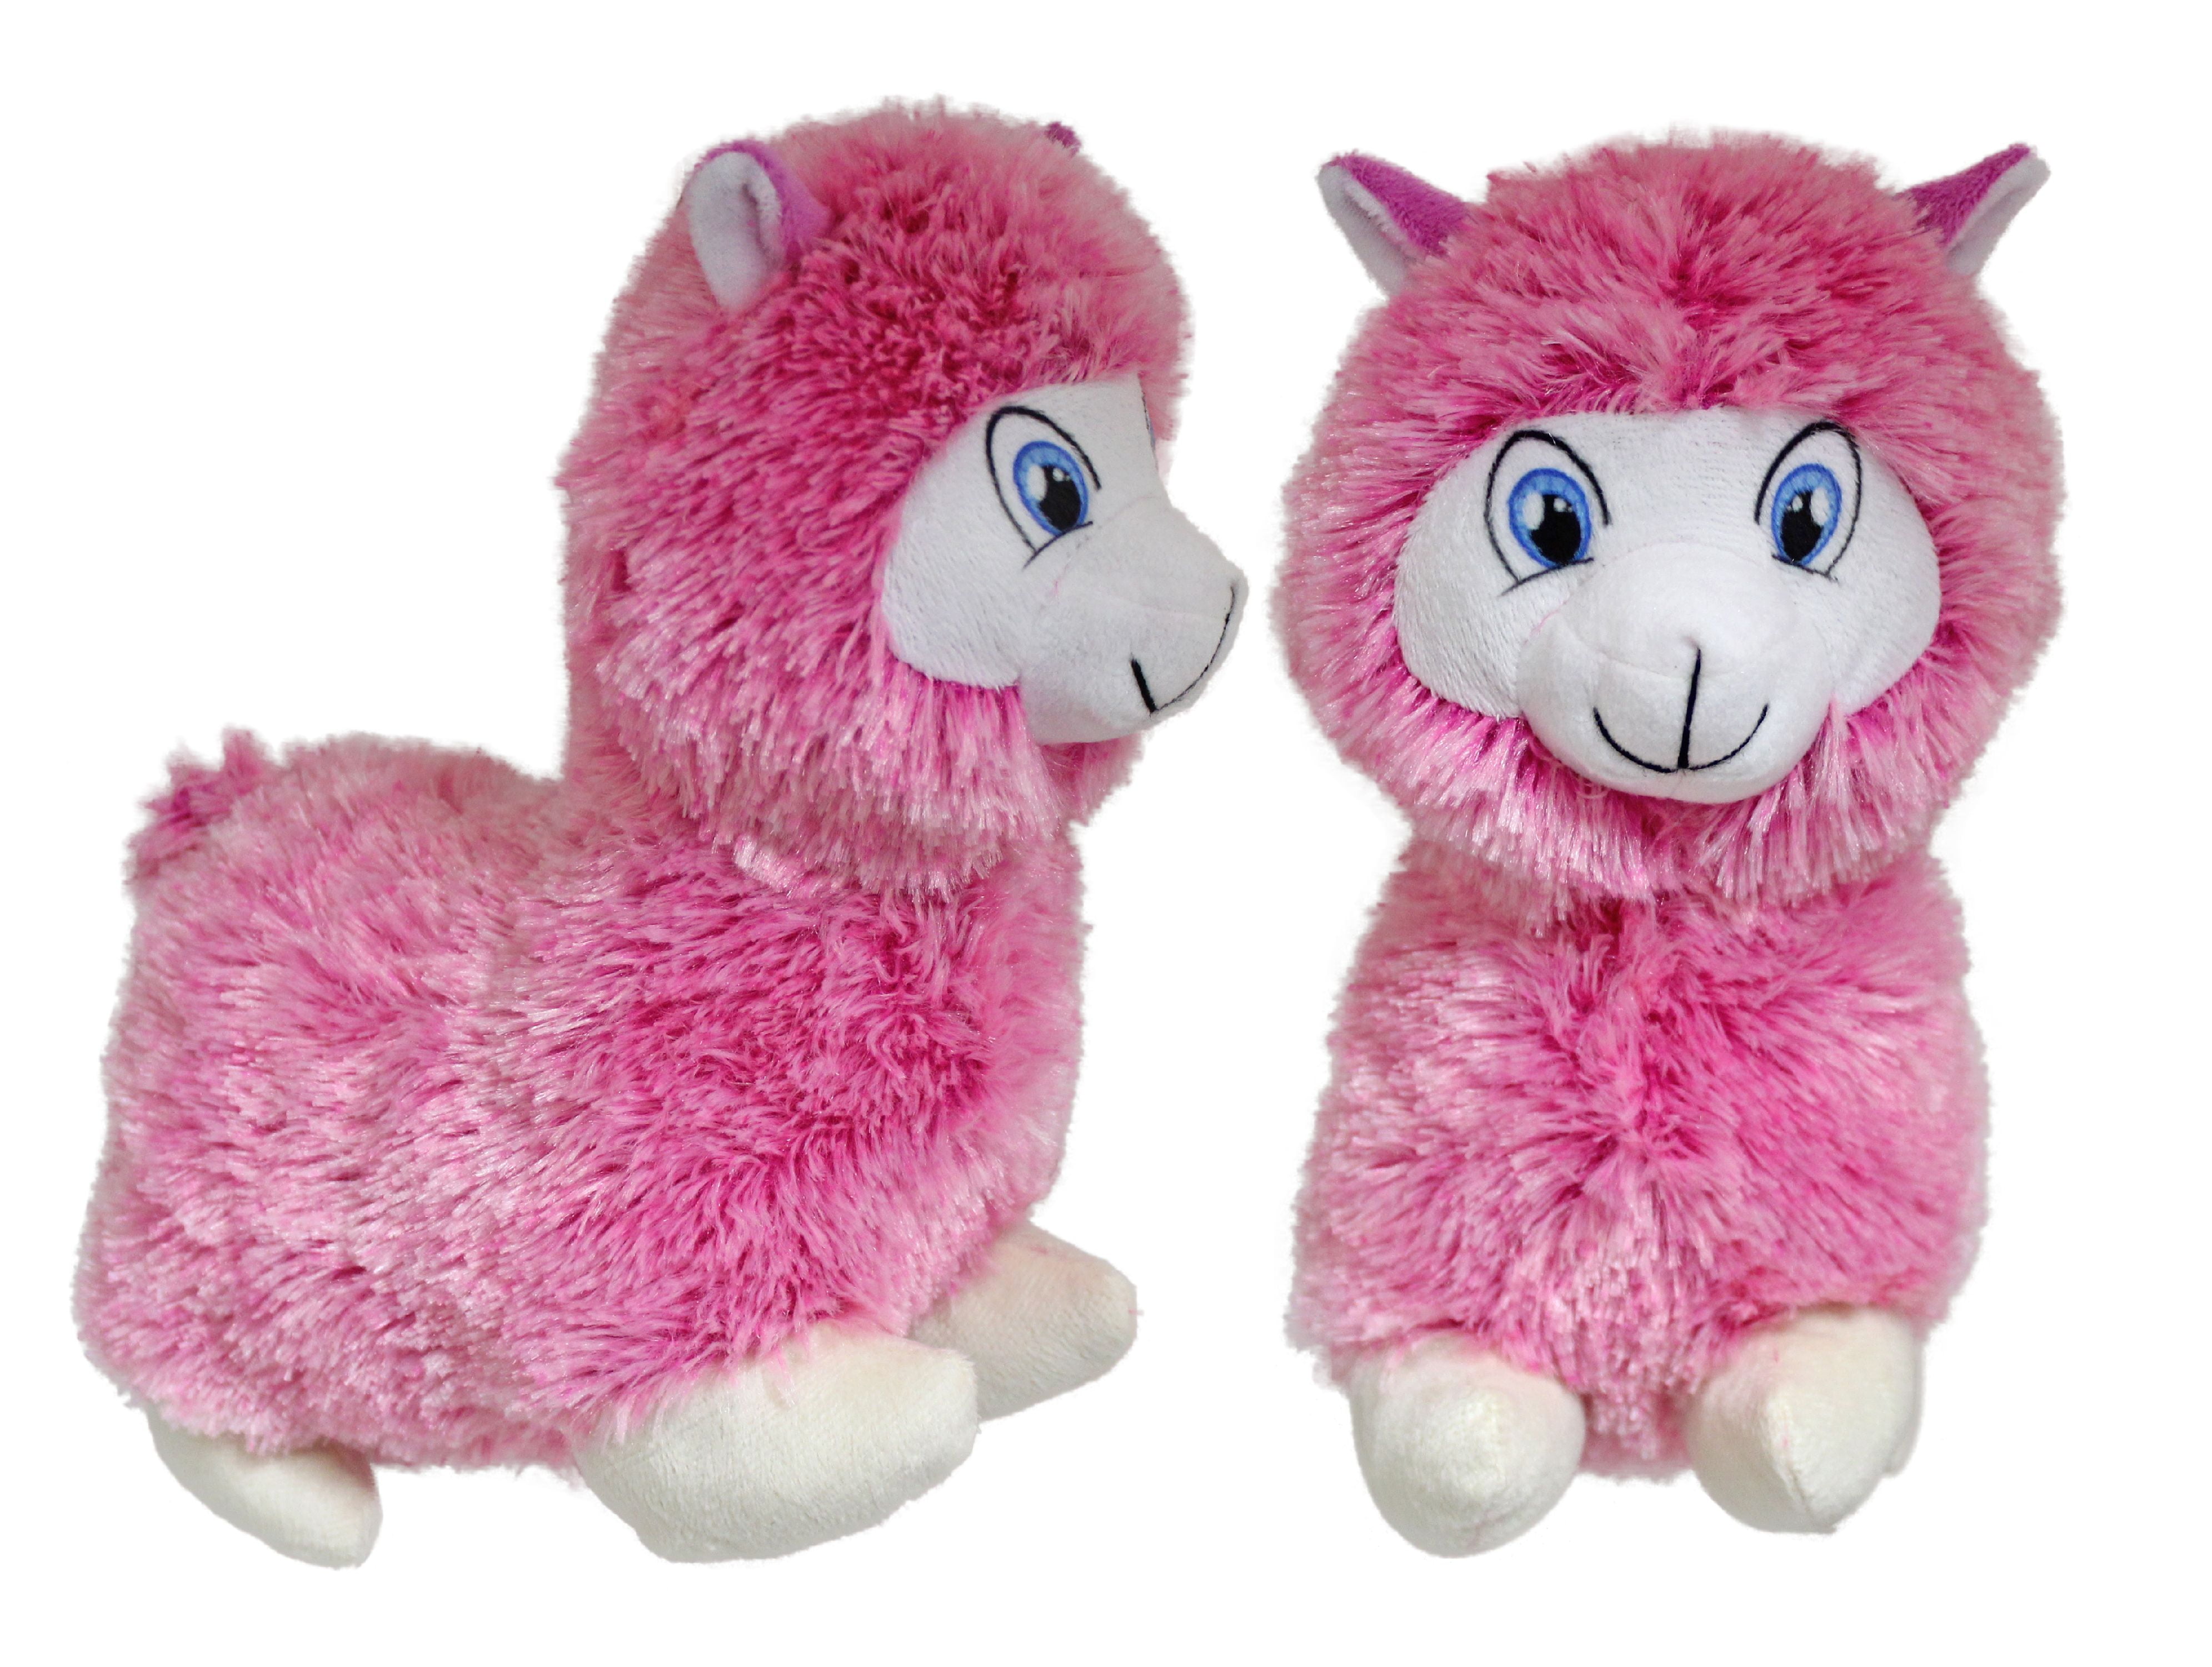 alpaca stuffed plush toys